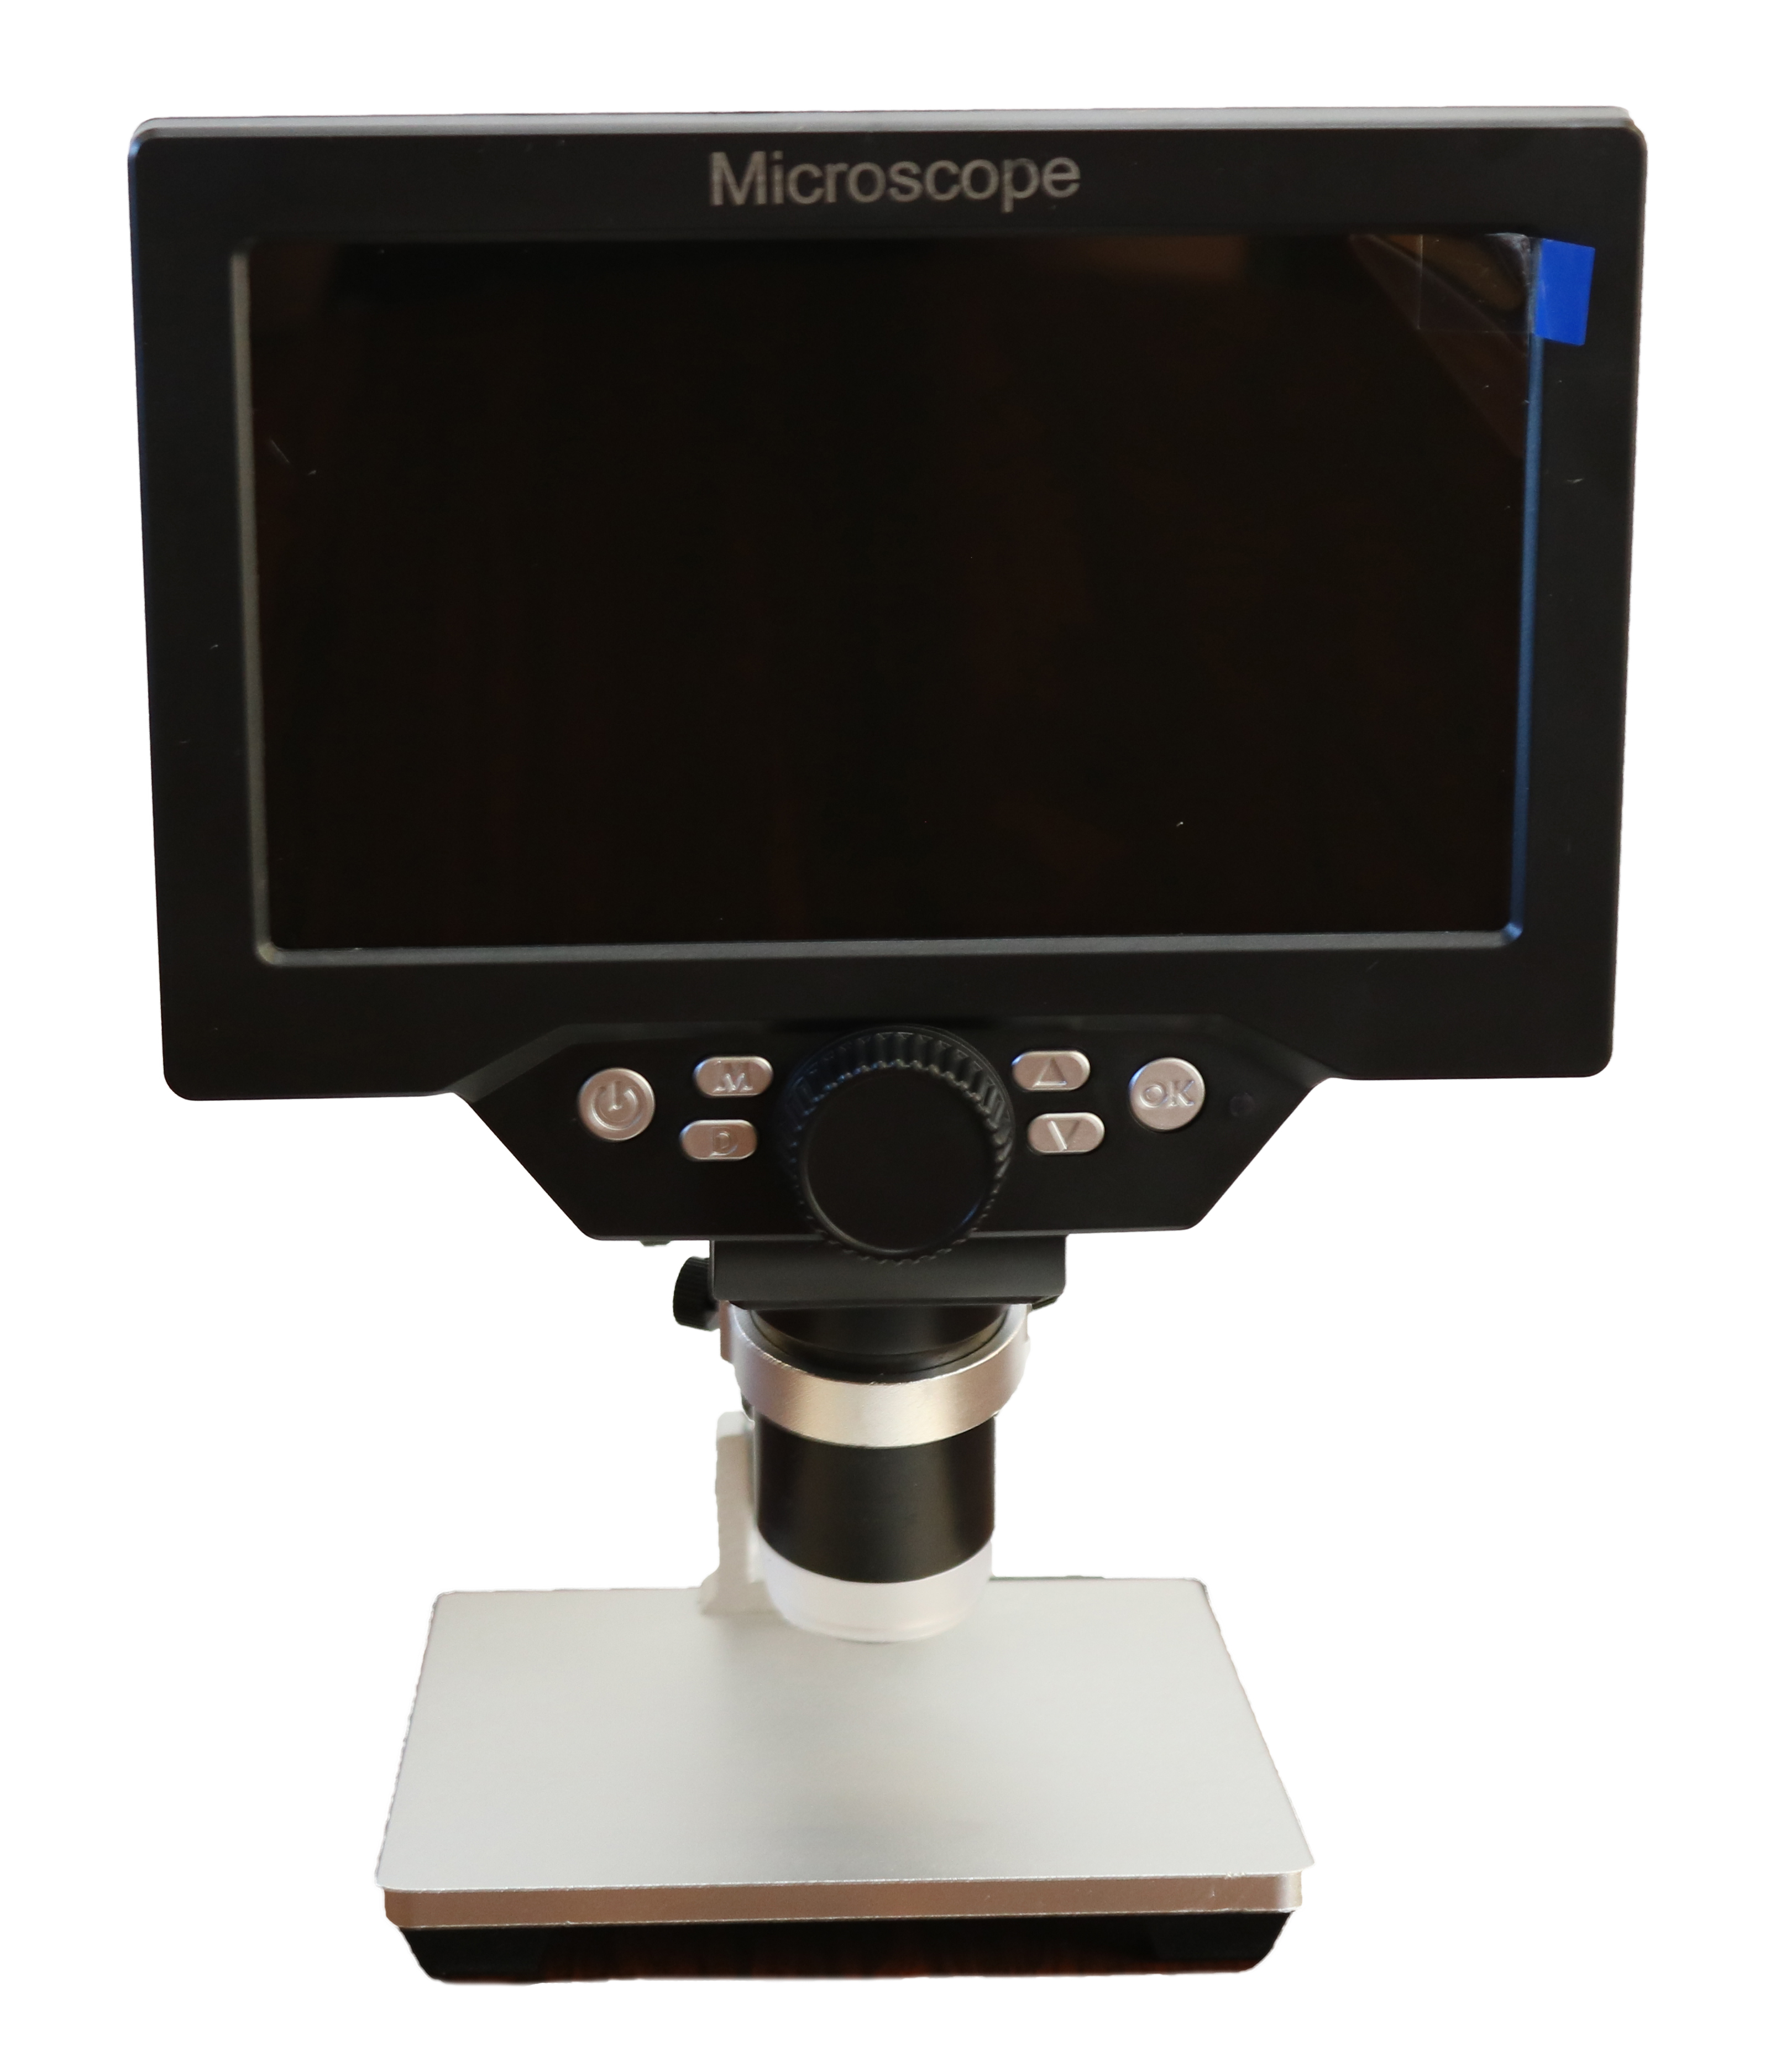 A black digital mircoscope